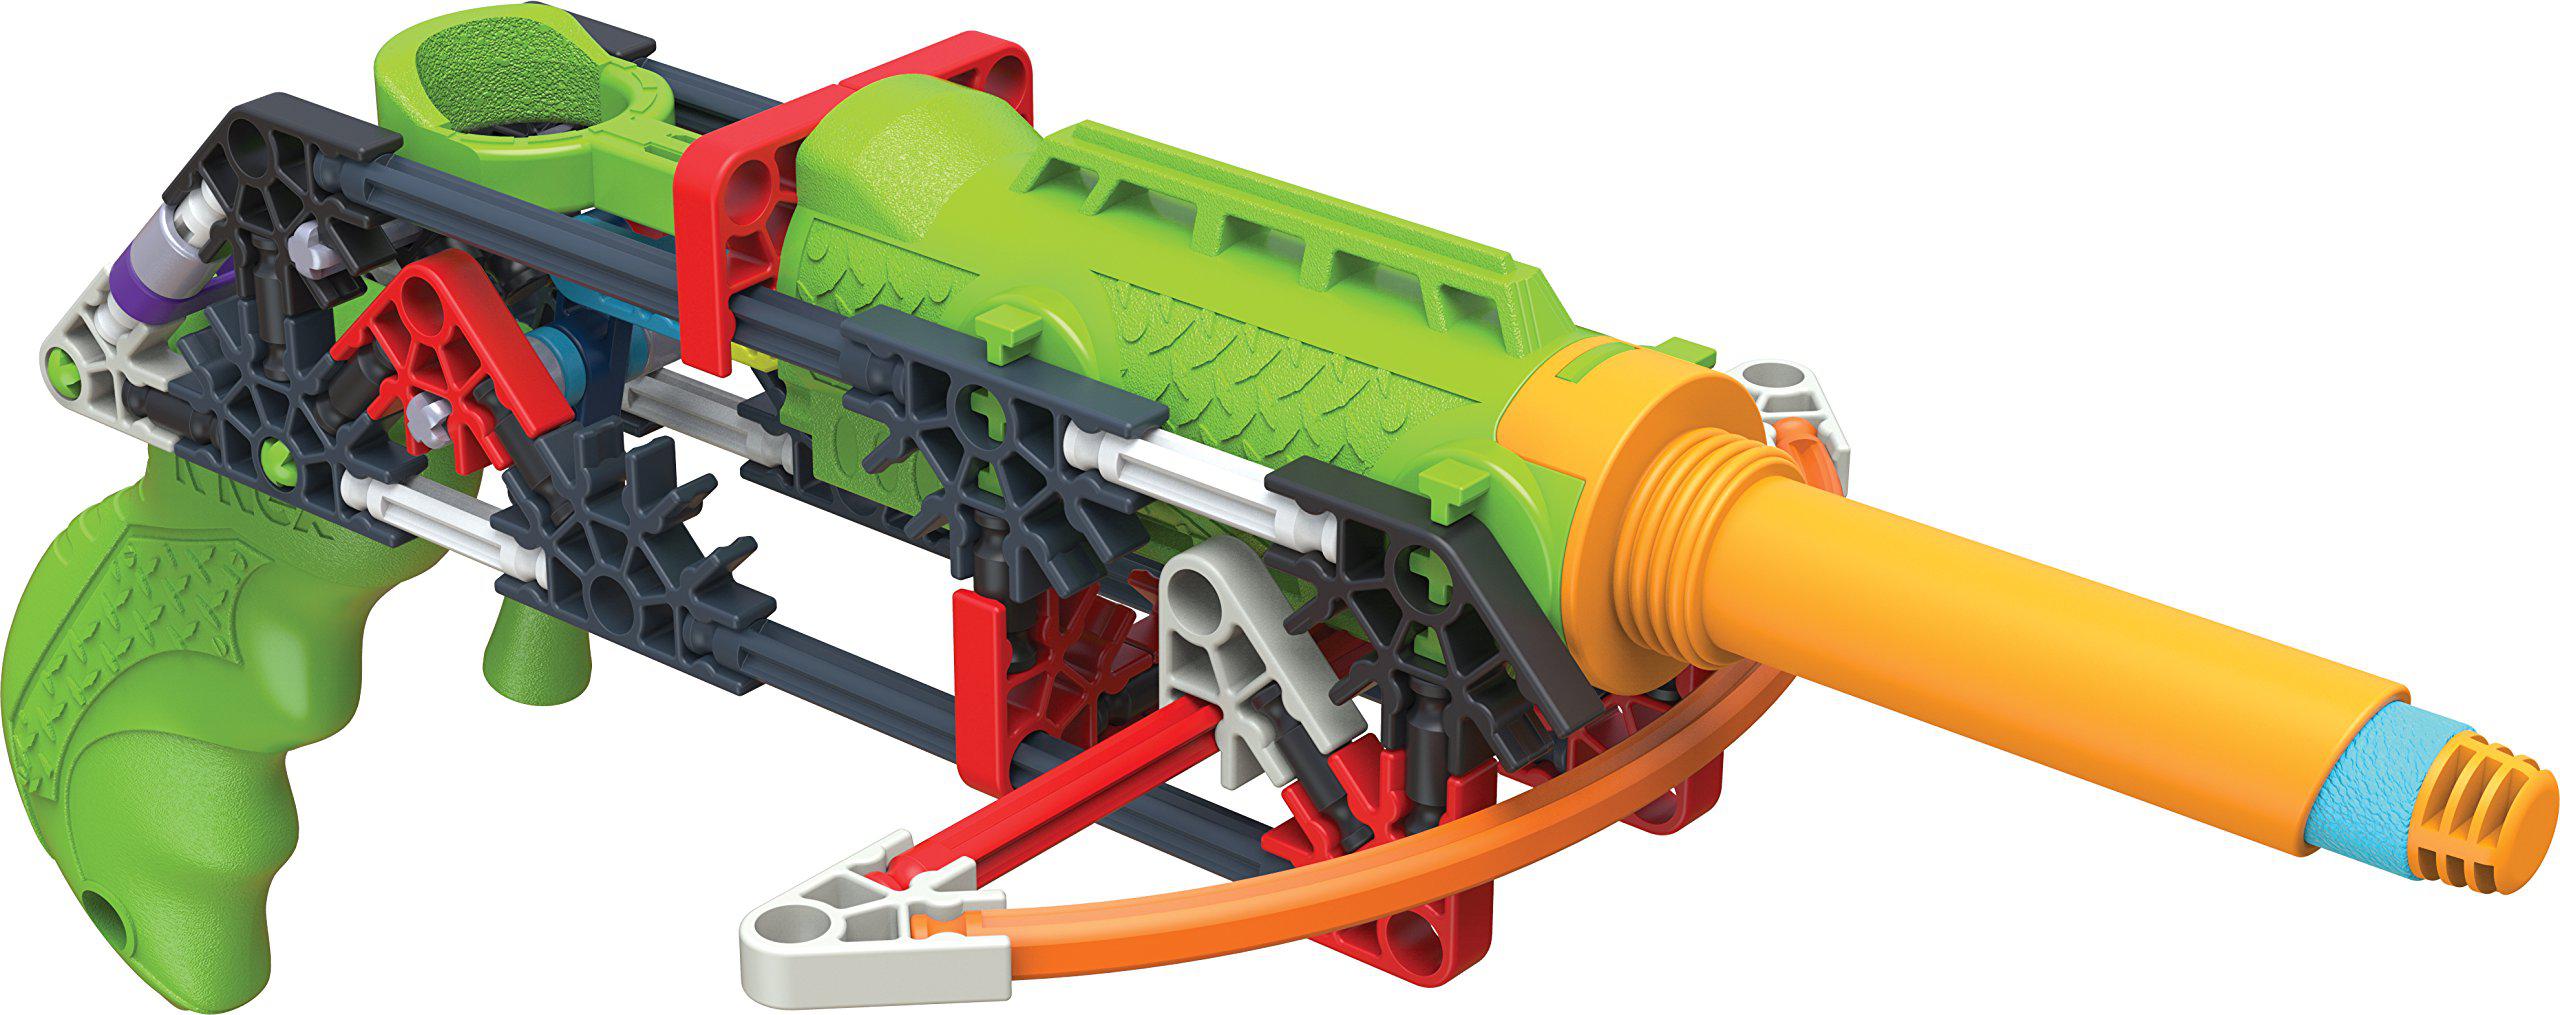 K\'NEX k'nex k-force - mini cross building set - 82 pieces - ages 8+ engineering educational toy